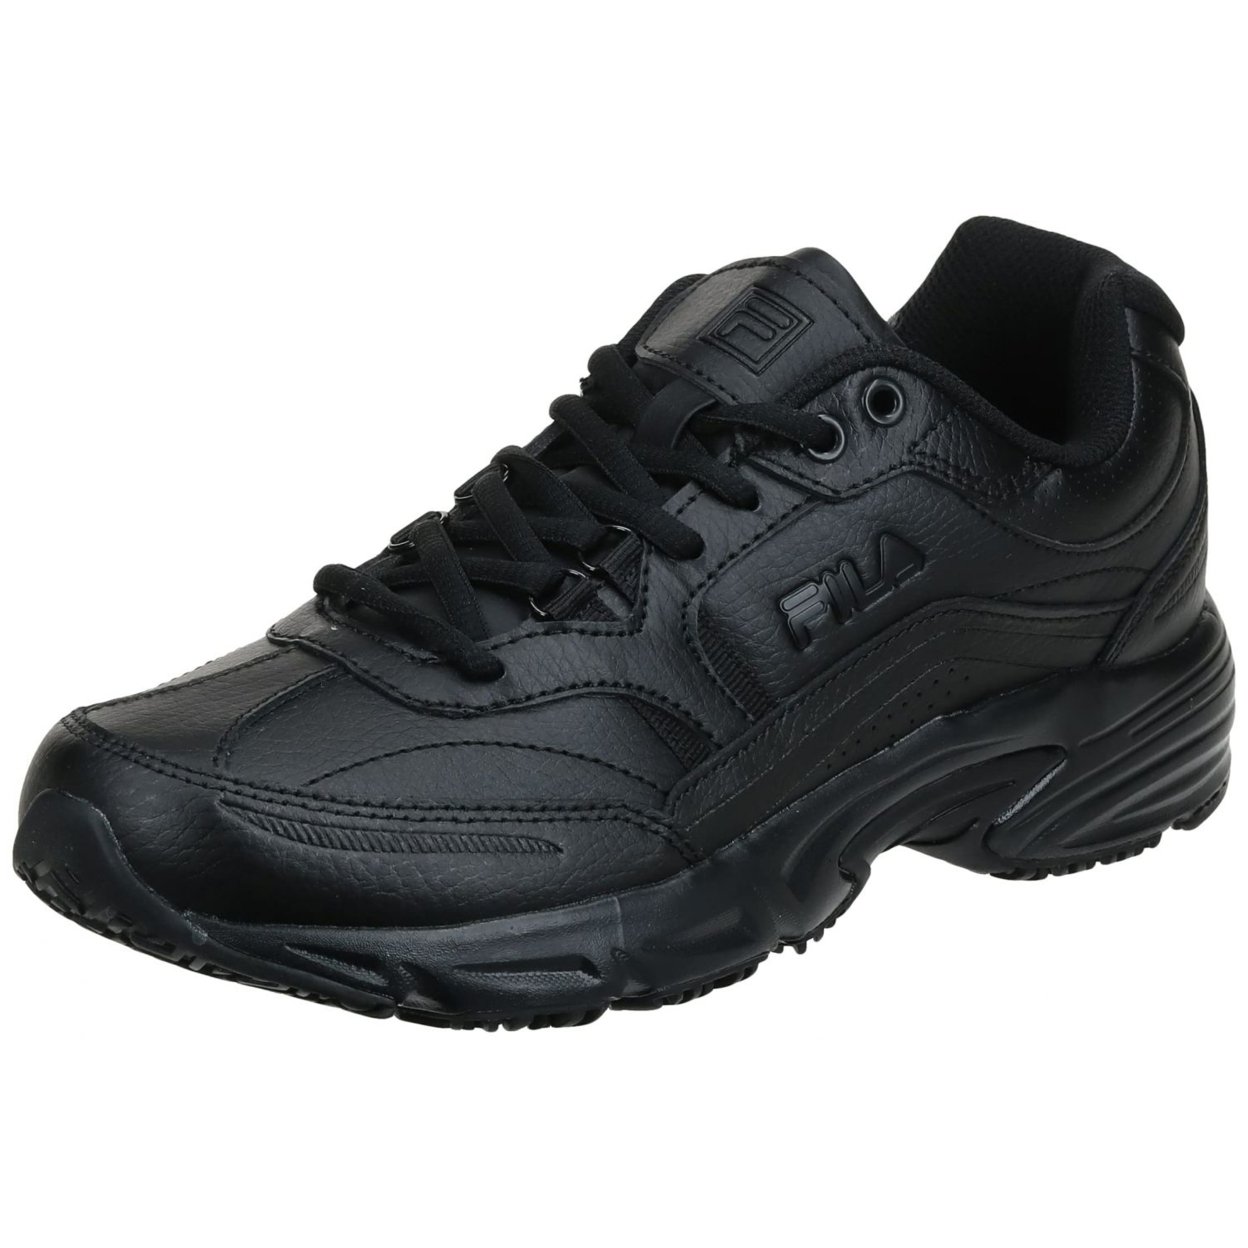 Fila Men's Memory Workshift-m Shoes M US Men BLK/BLK/BLK - Black, 10.5